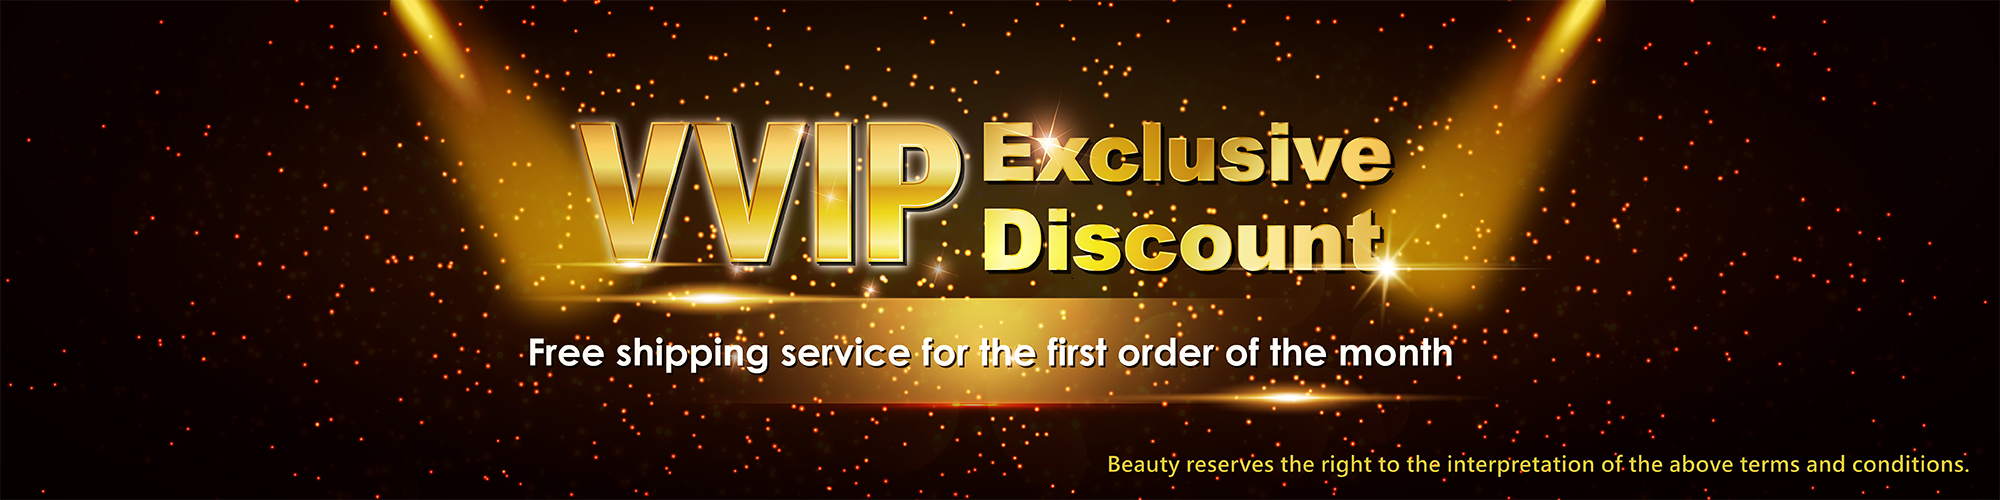 VVIP exclusive discount_2000x500.jpg